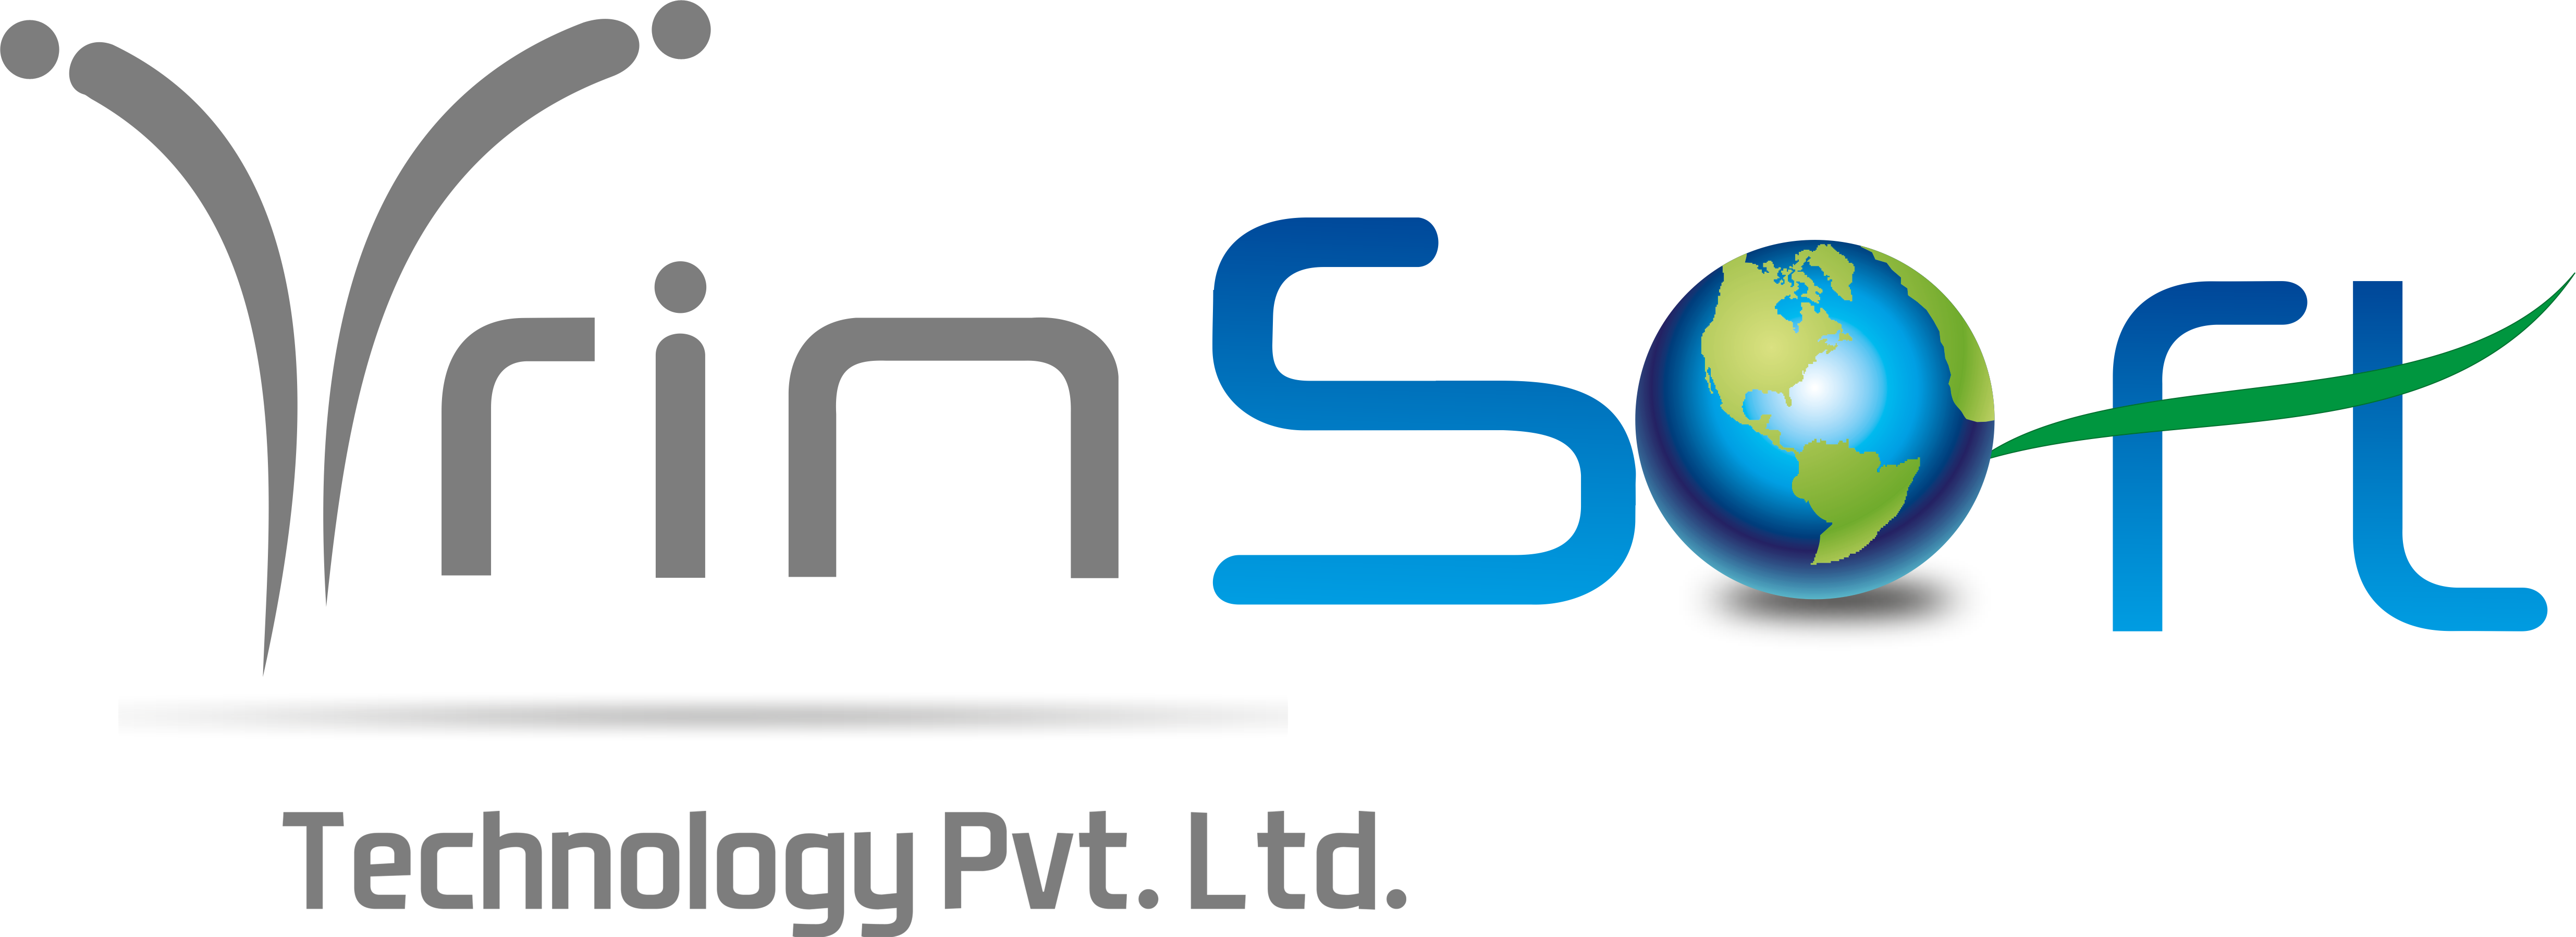 VrinSoft logo